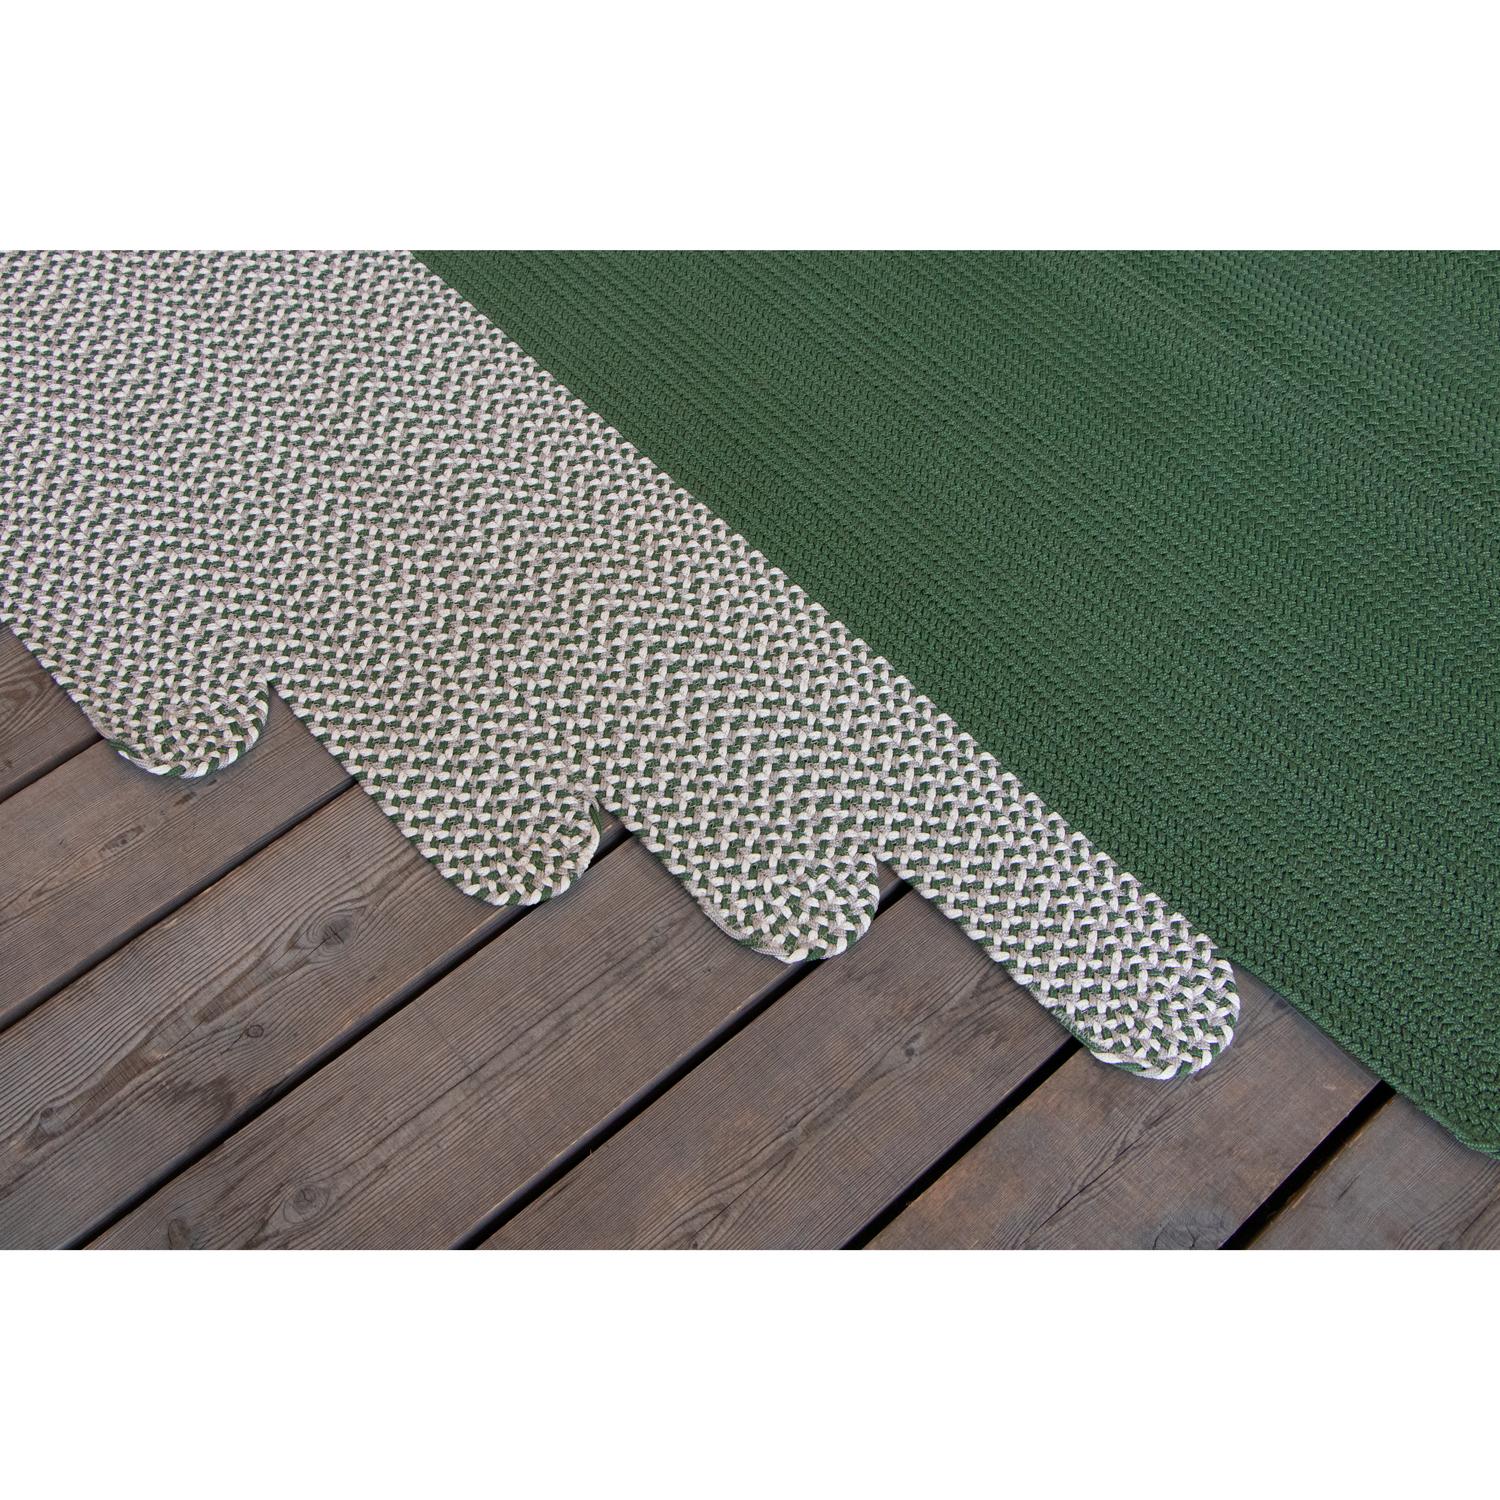 Tappeto foglia outdoor verde grigio design italienisch Deanna Comellini 176x300cm (Sonstiges) im Angebot